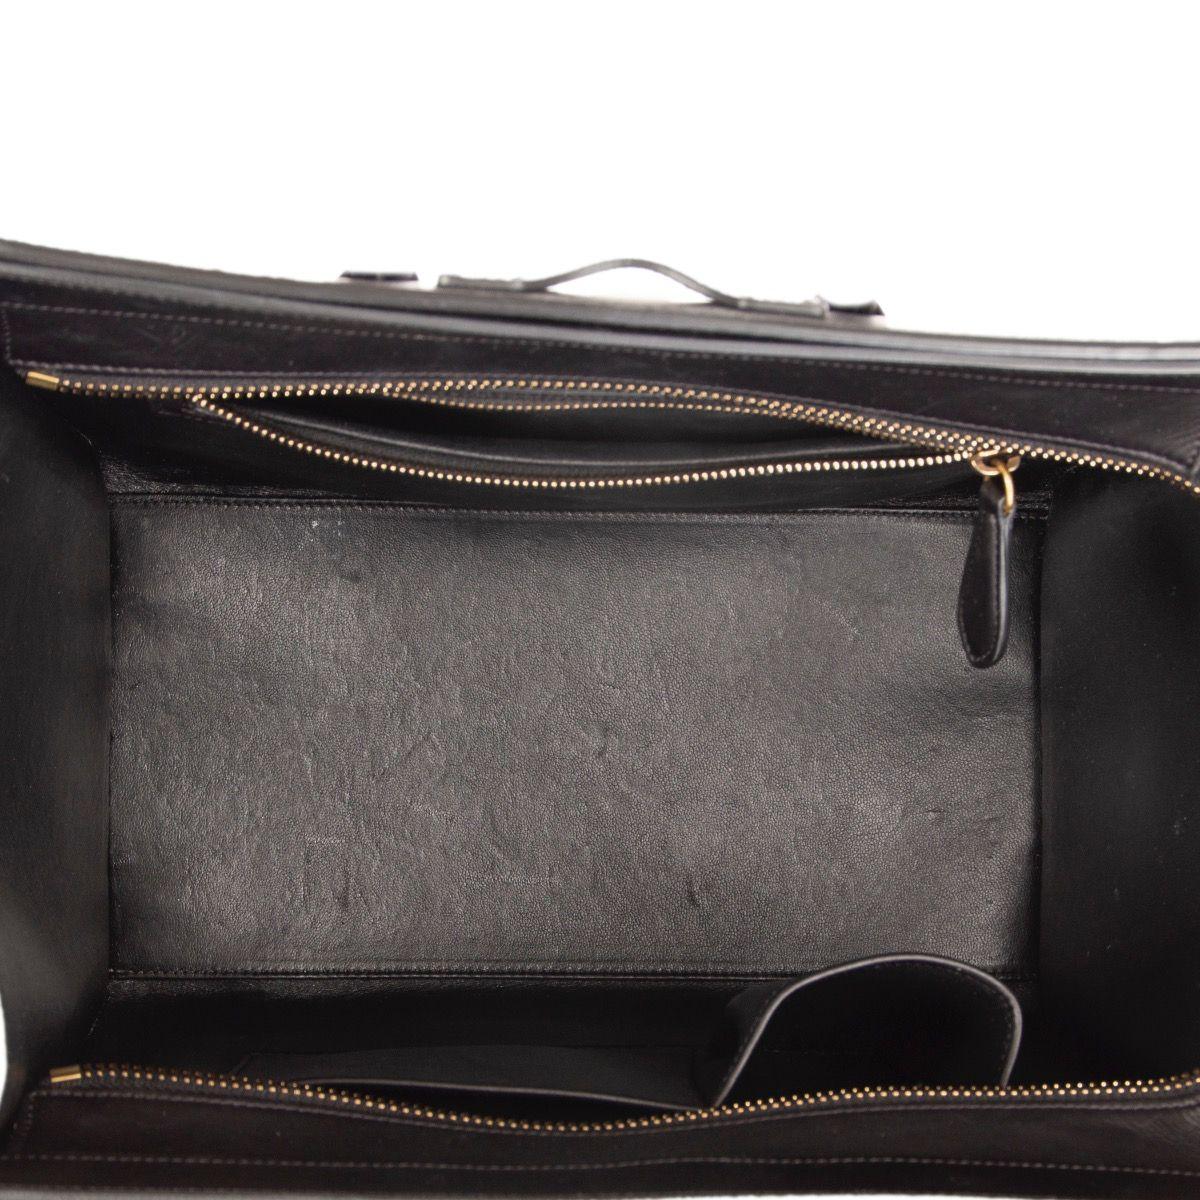 Black CELINE black & white  leather MINI LUGGAGE Tote Shoulder Bag